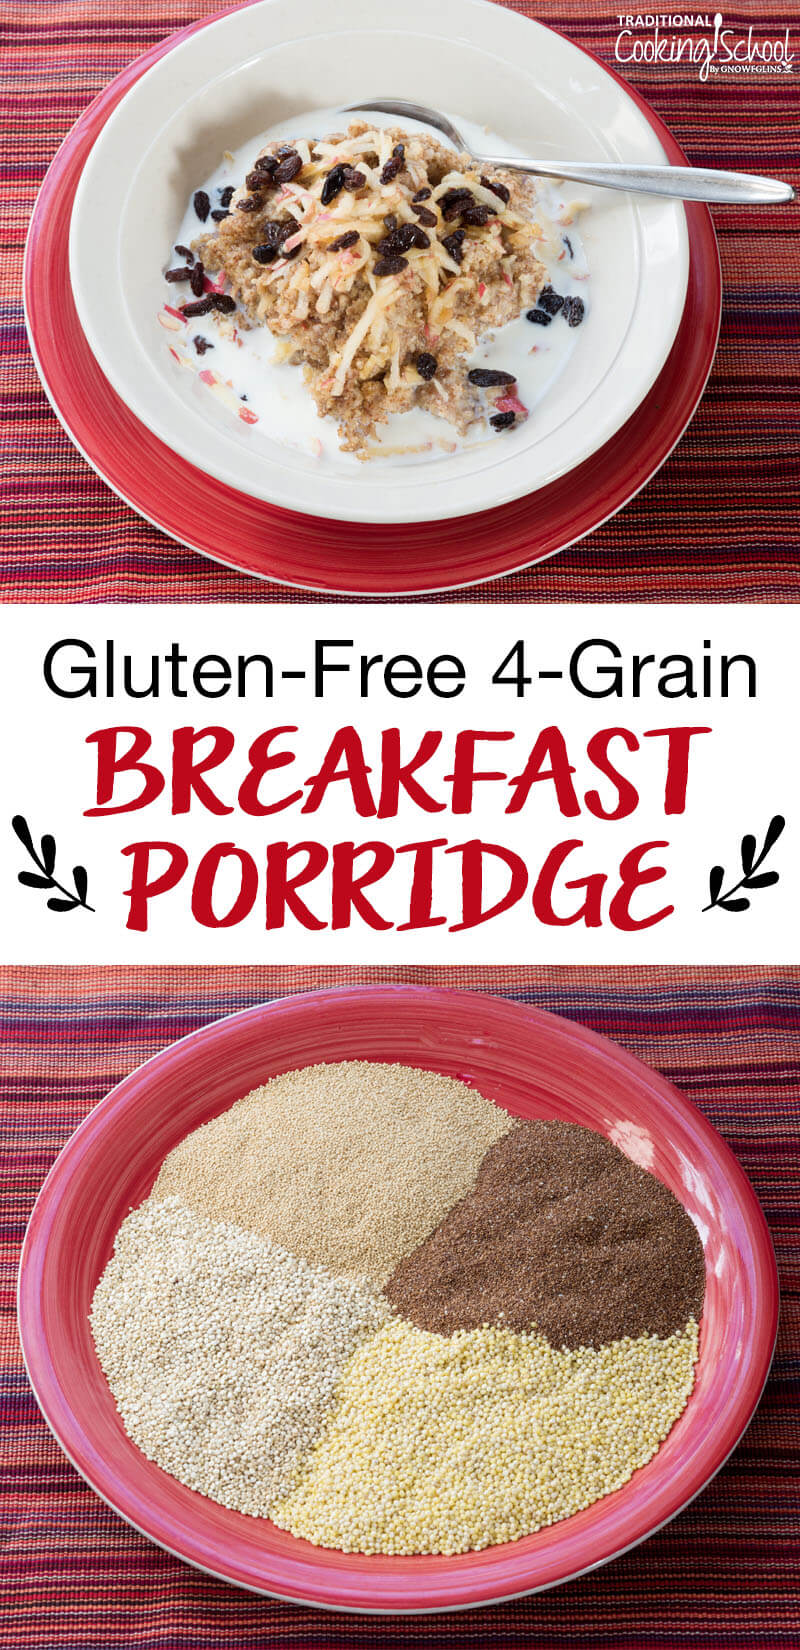 photo collage of breakfast porridge with text overlay: "Gluten-Free 4-Grain Breakfast Porridge"